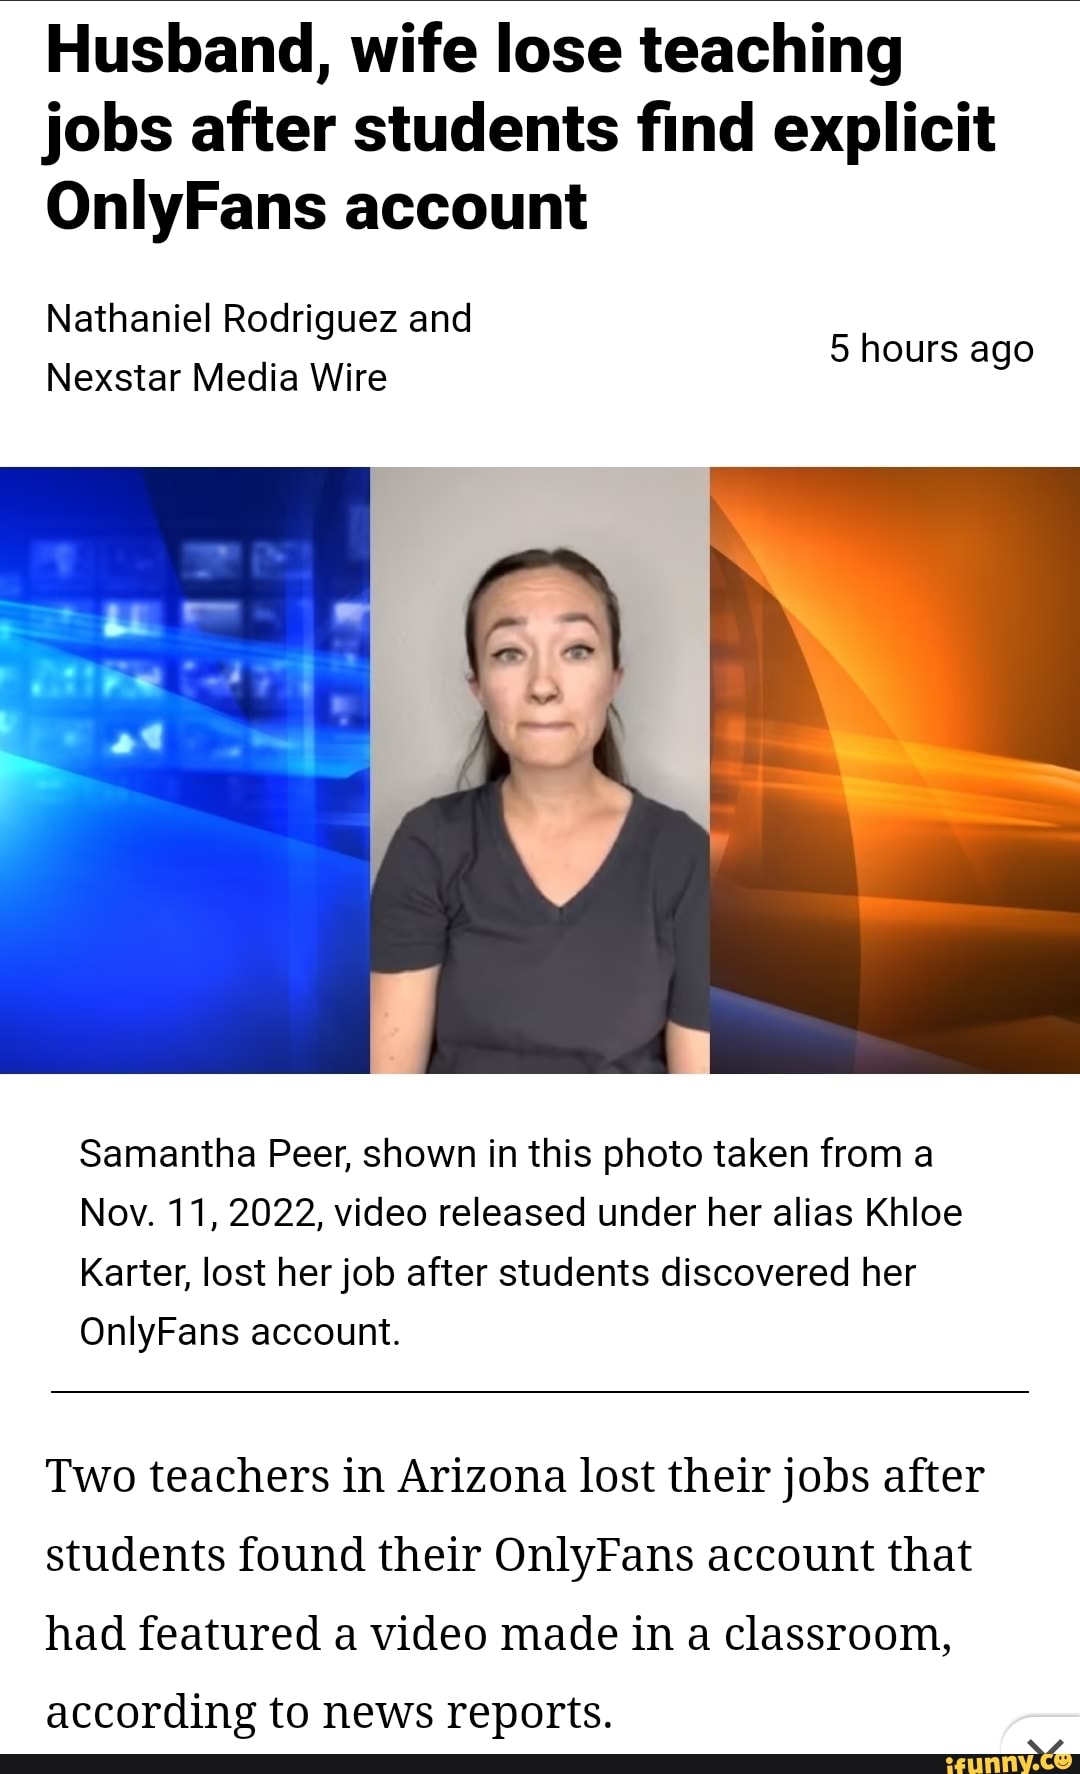 Samantha peer only fans leak